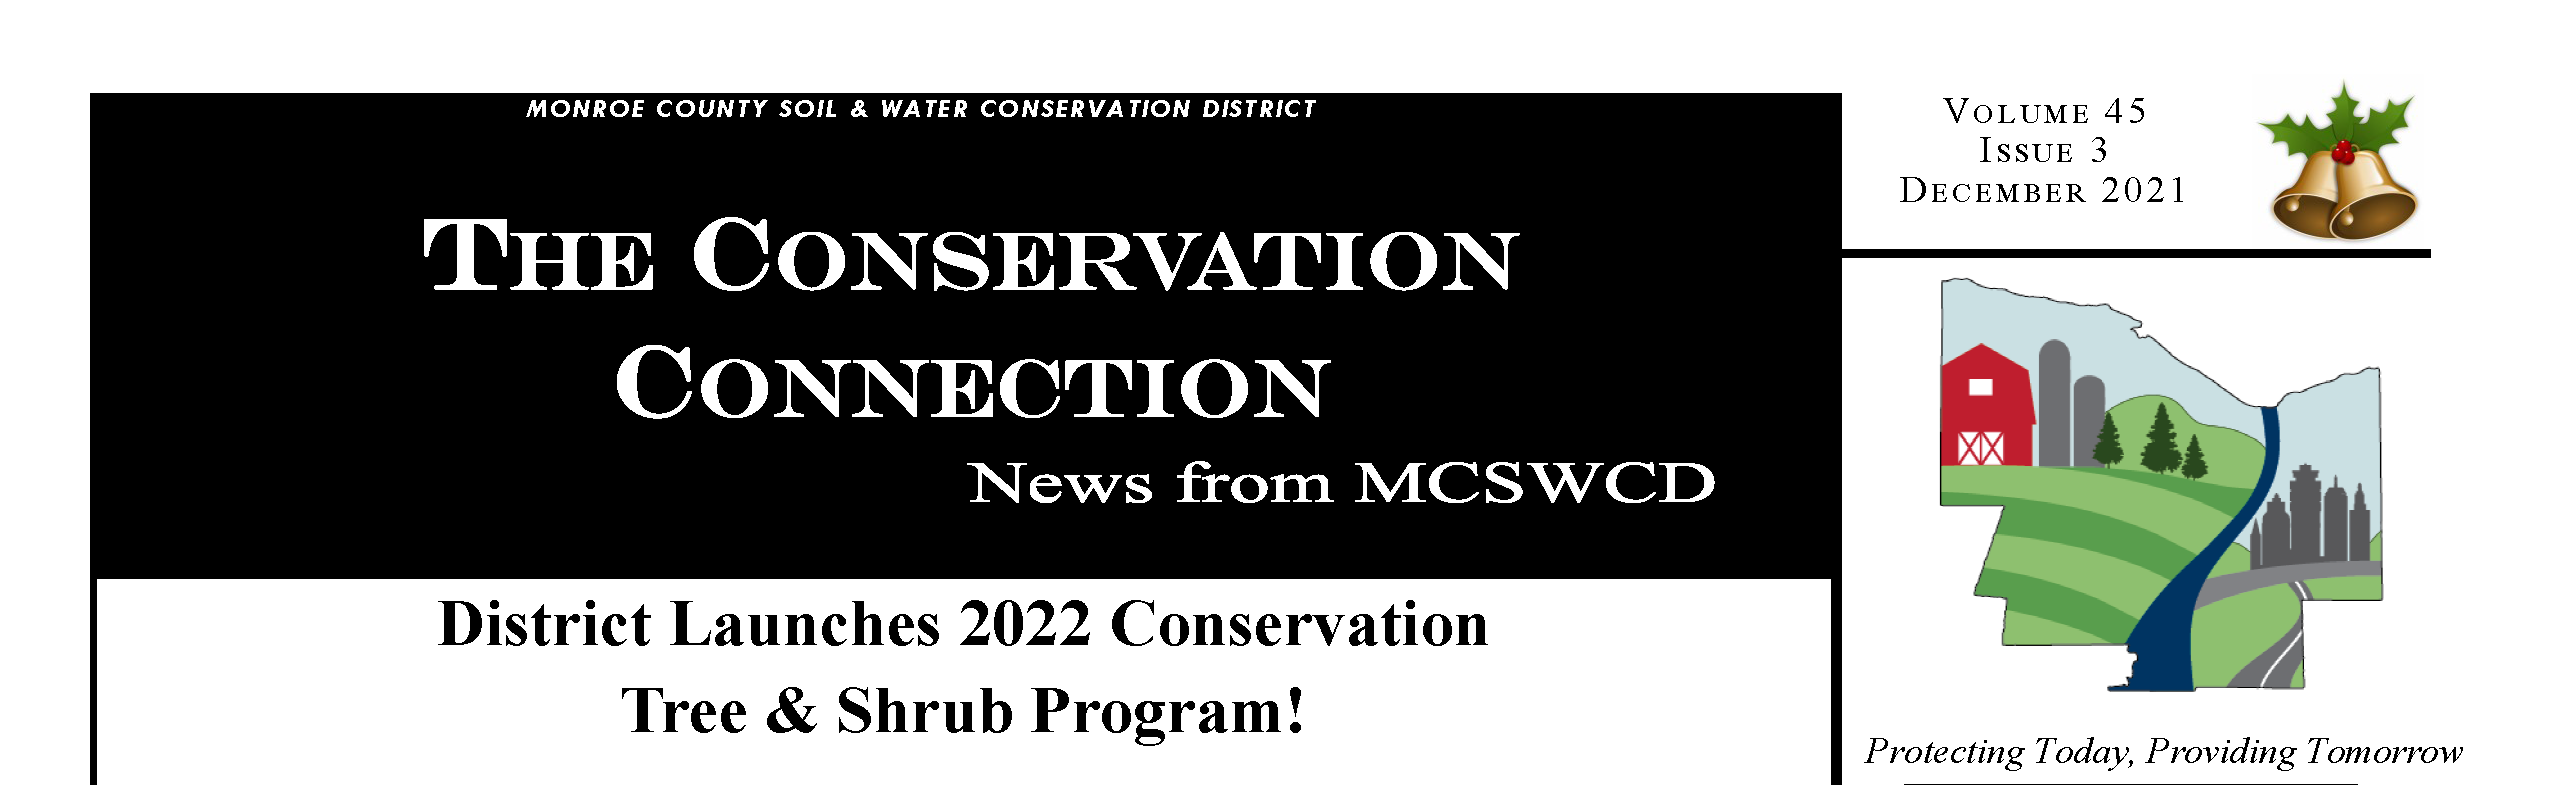 Monroe SWCD December Newsletter 2021_Page_01